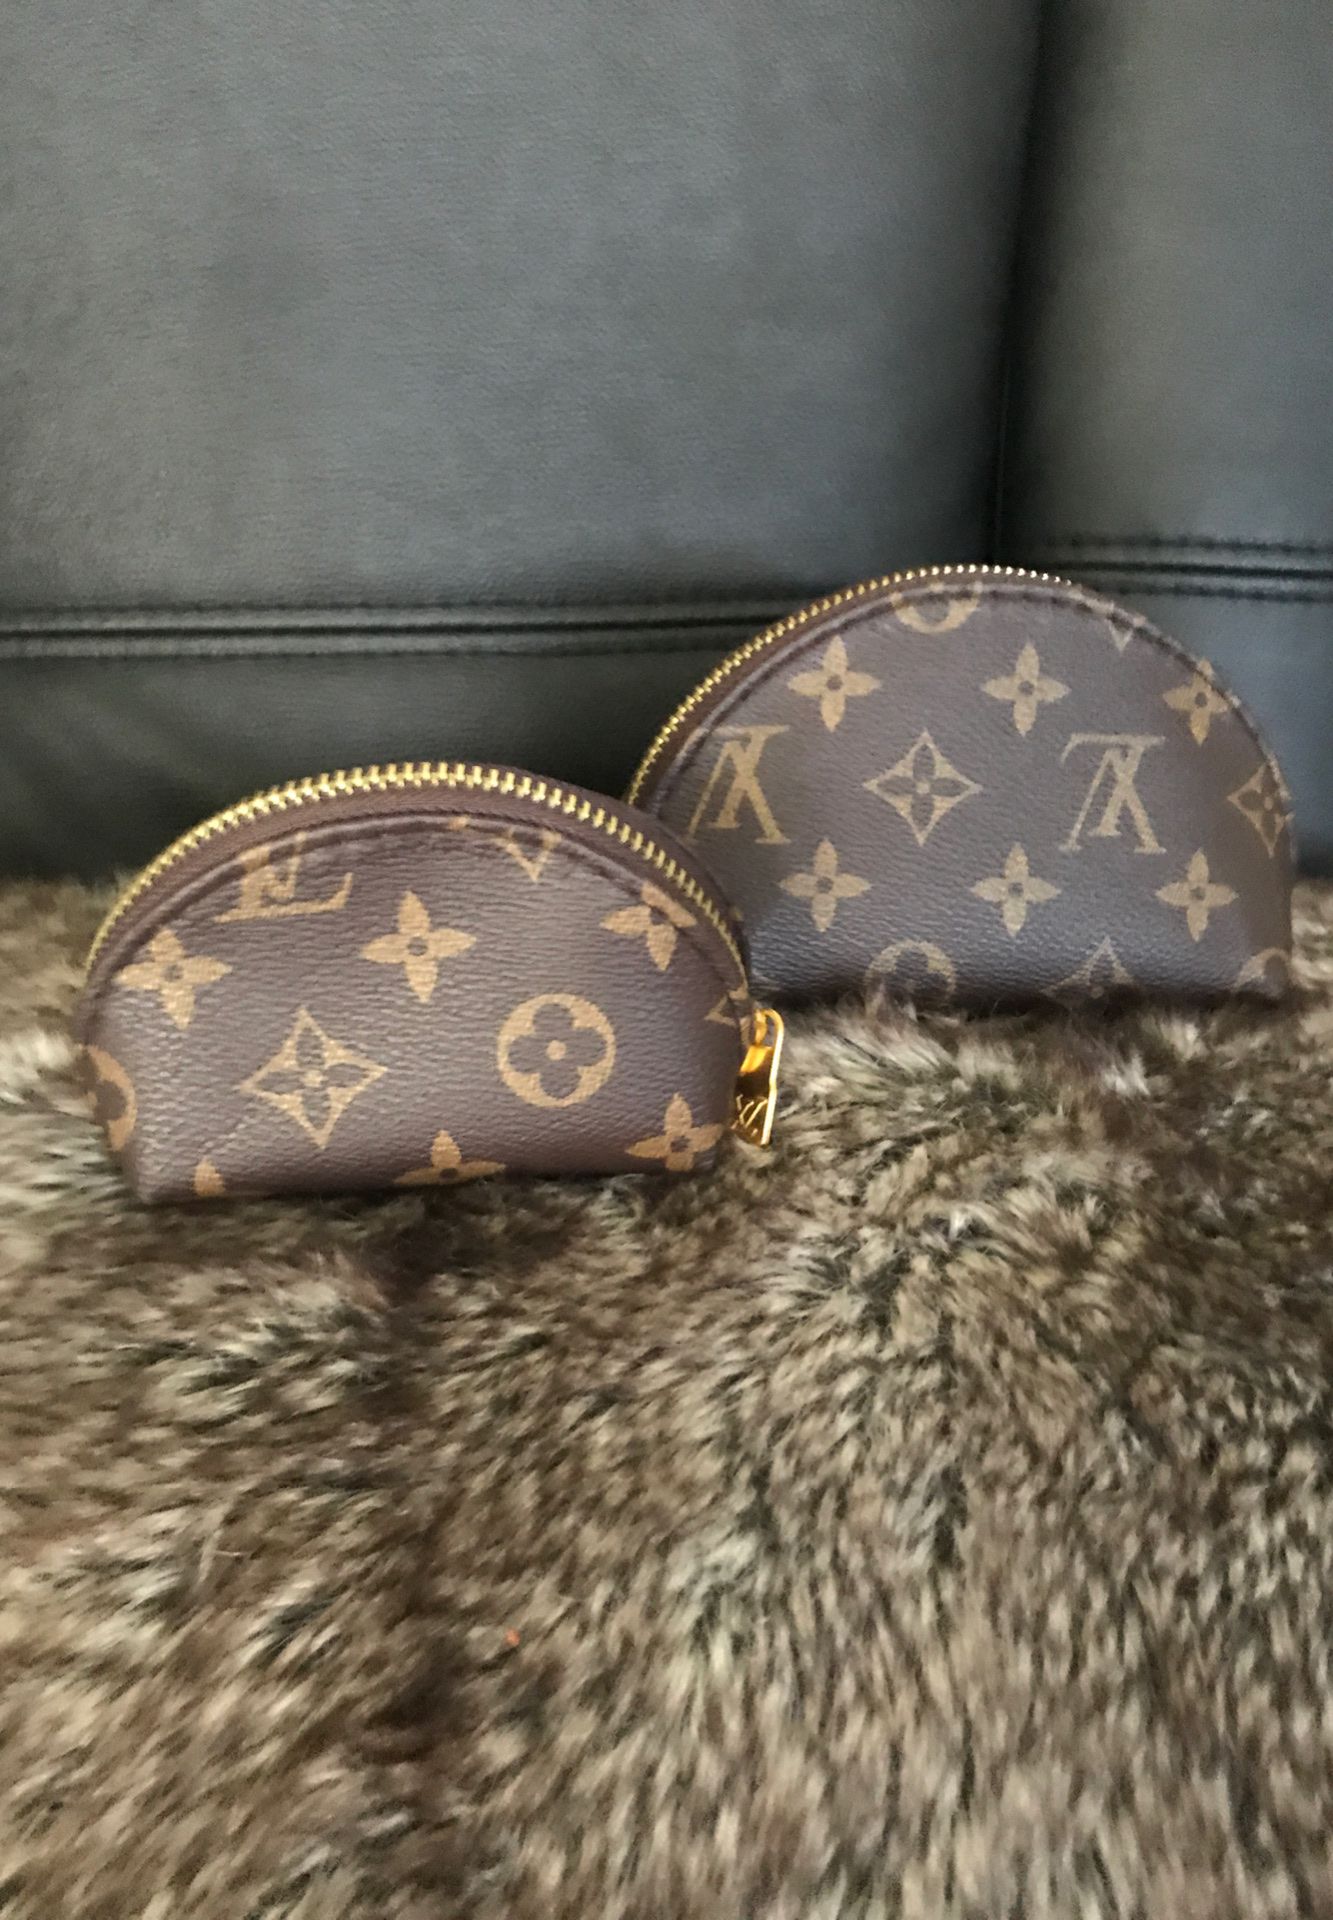 Cute miniature bags (PENDING)